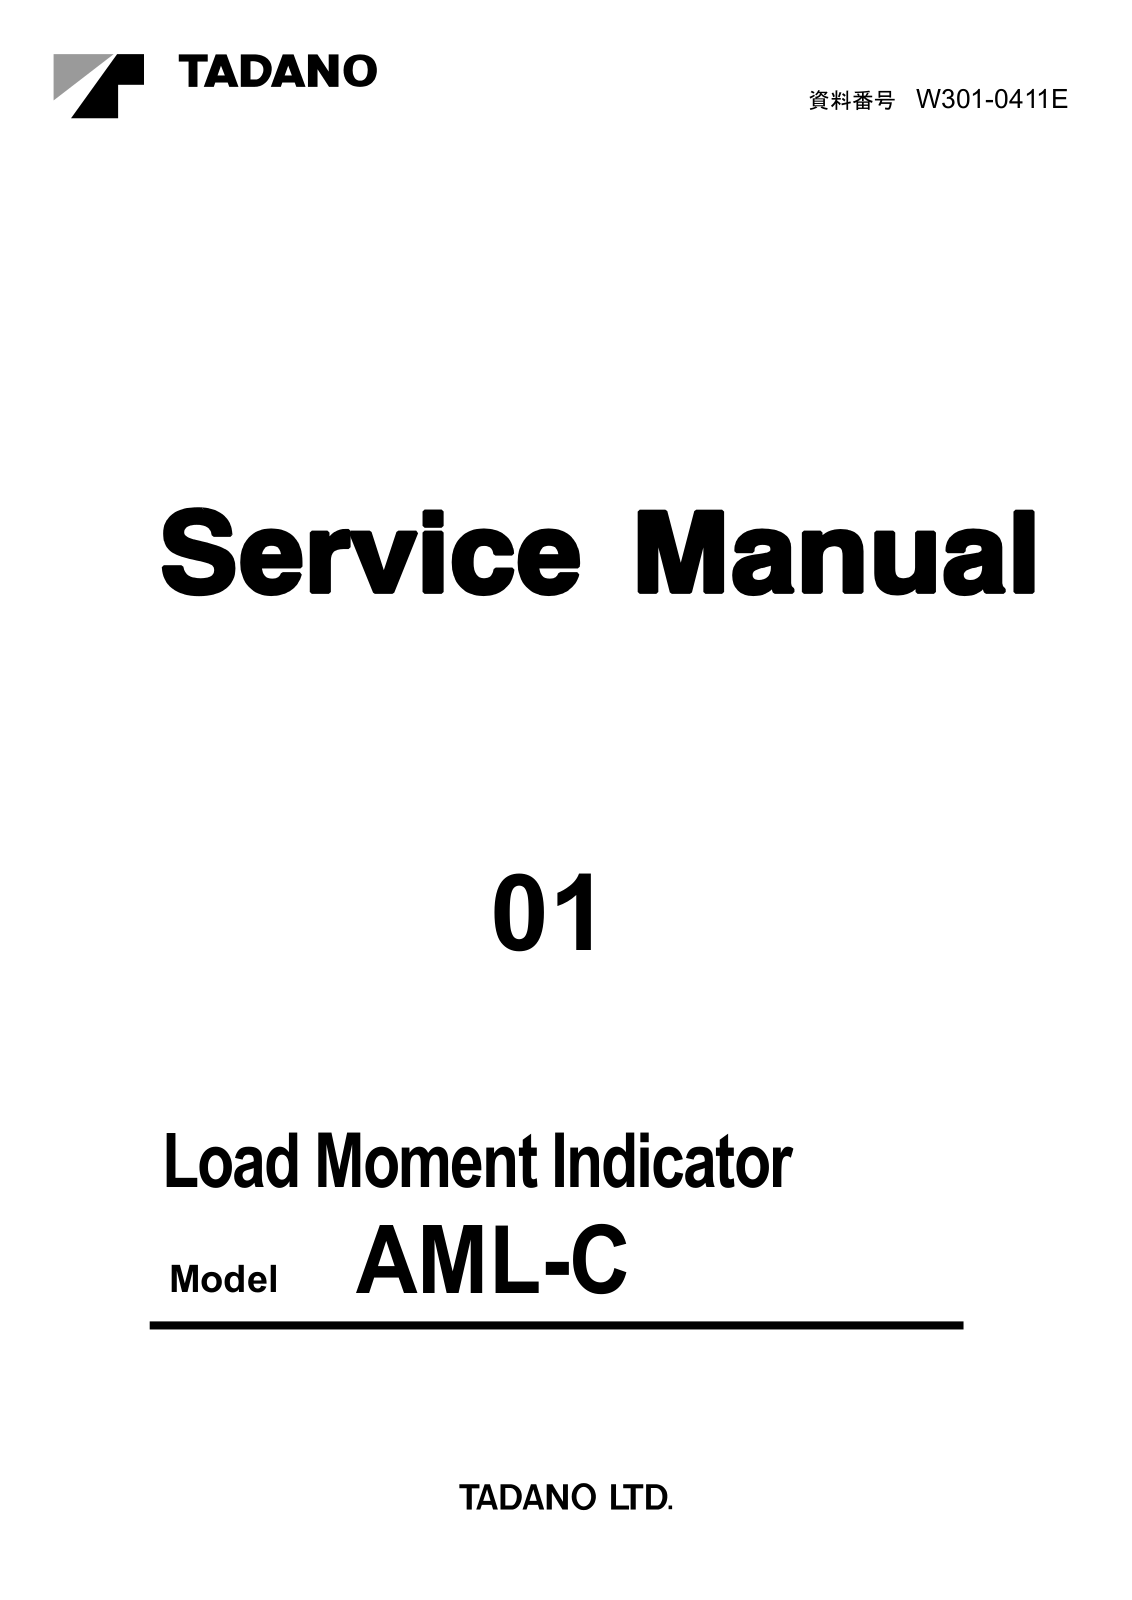 Tadano AML-C Service Manual